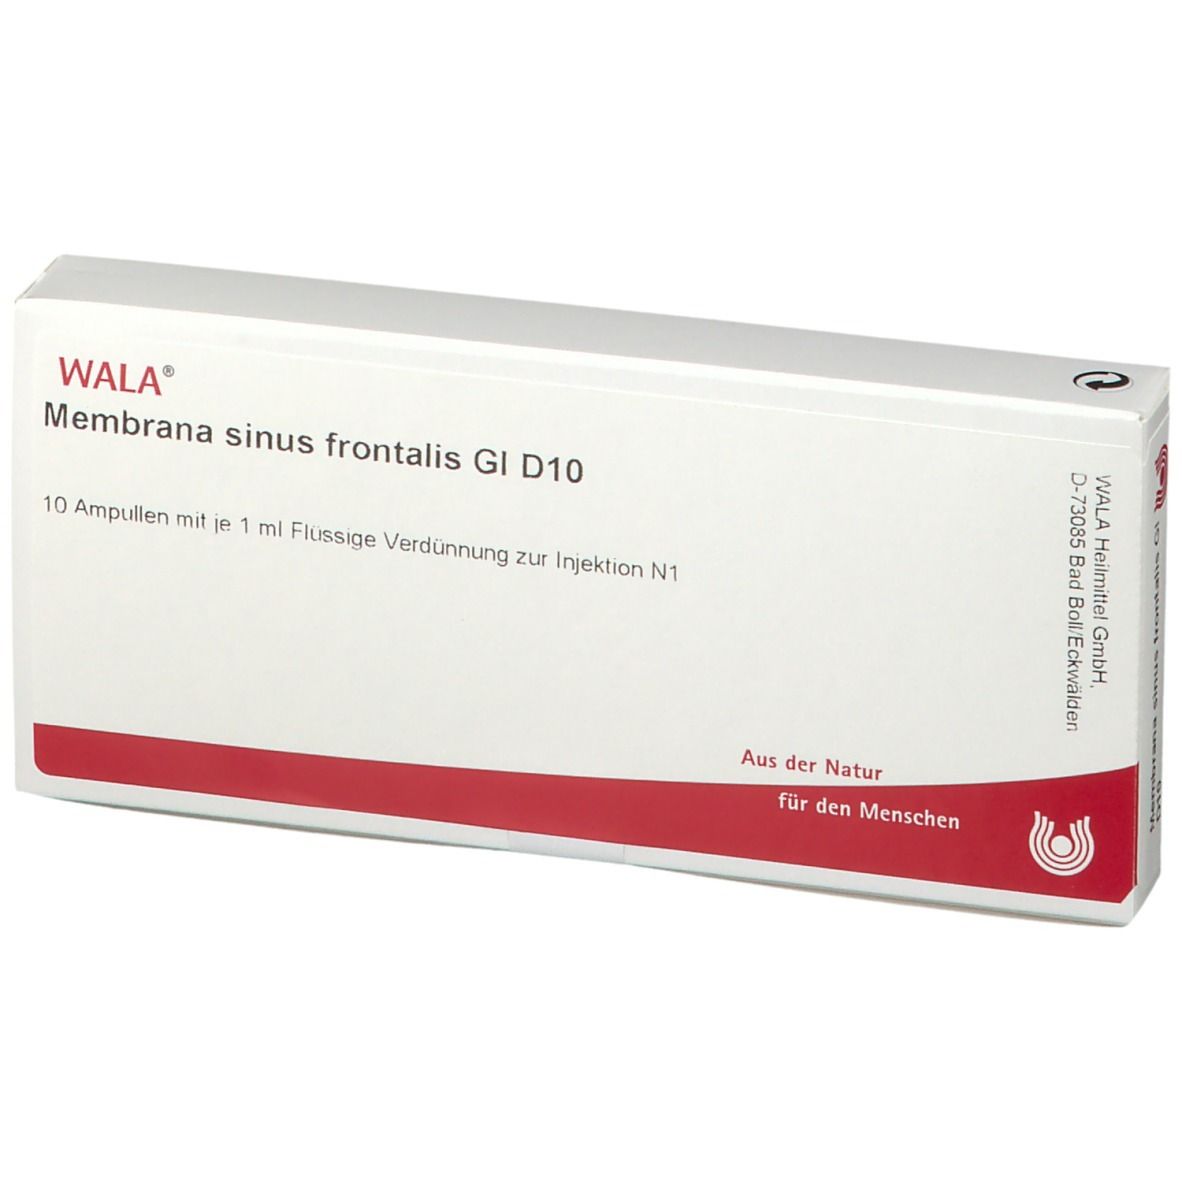 WALA® Membrana sinus frontalis Gl D 10